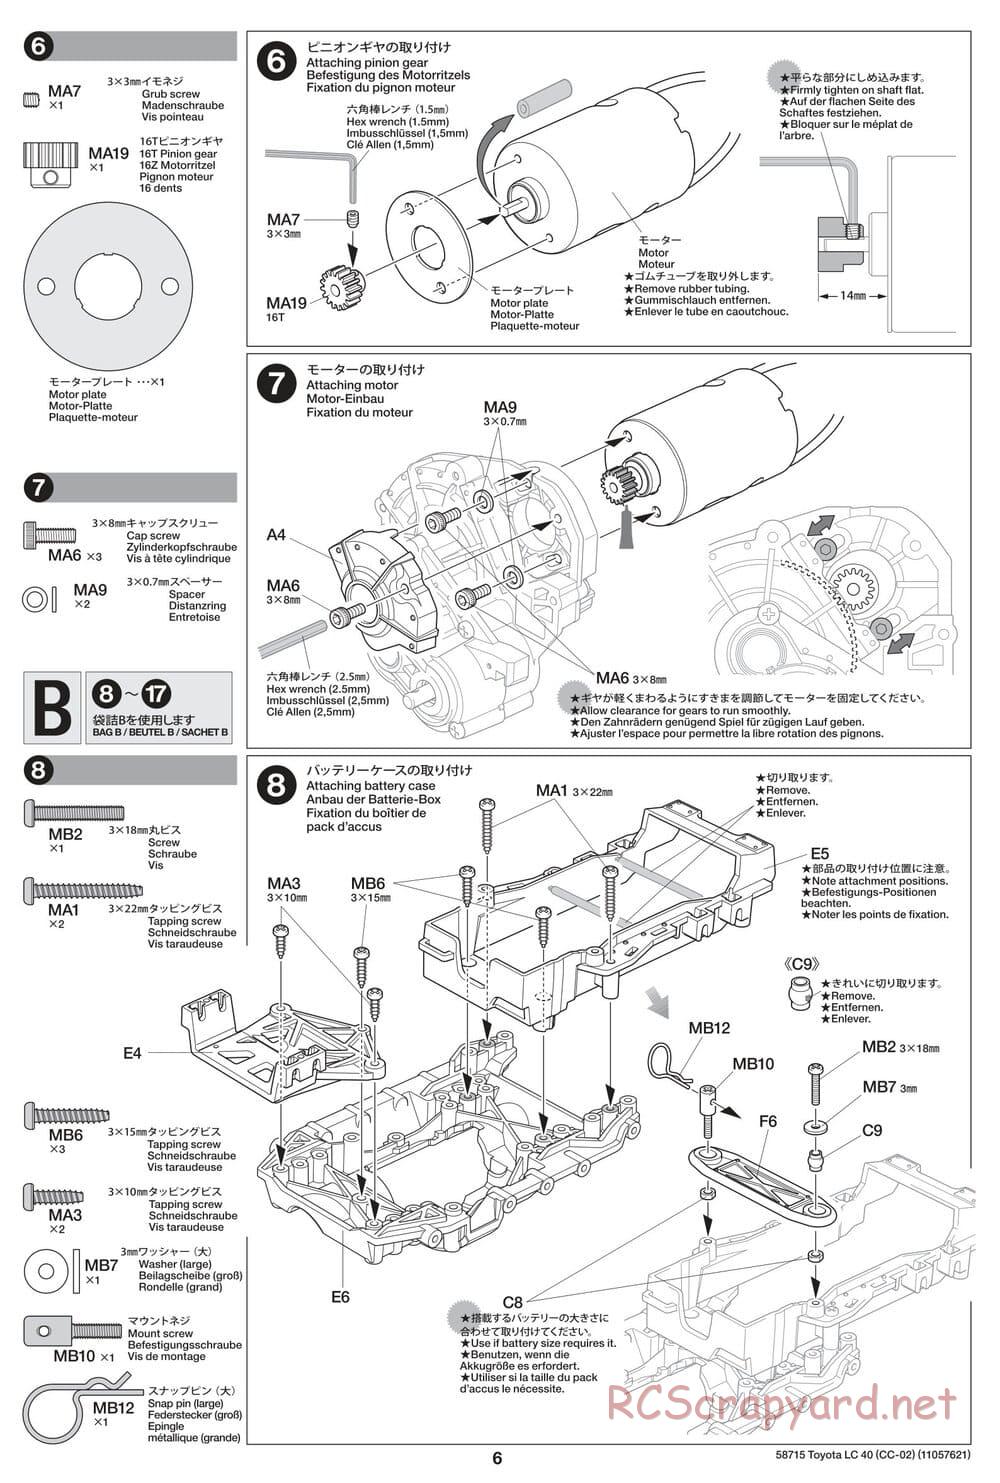 Tamiya - Toyota Land Cruiser 40 - CC-02 Chassis - Manual - Page 6